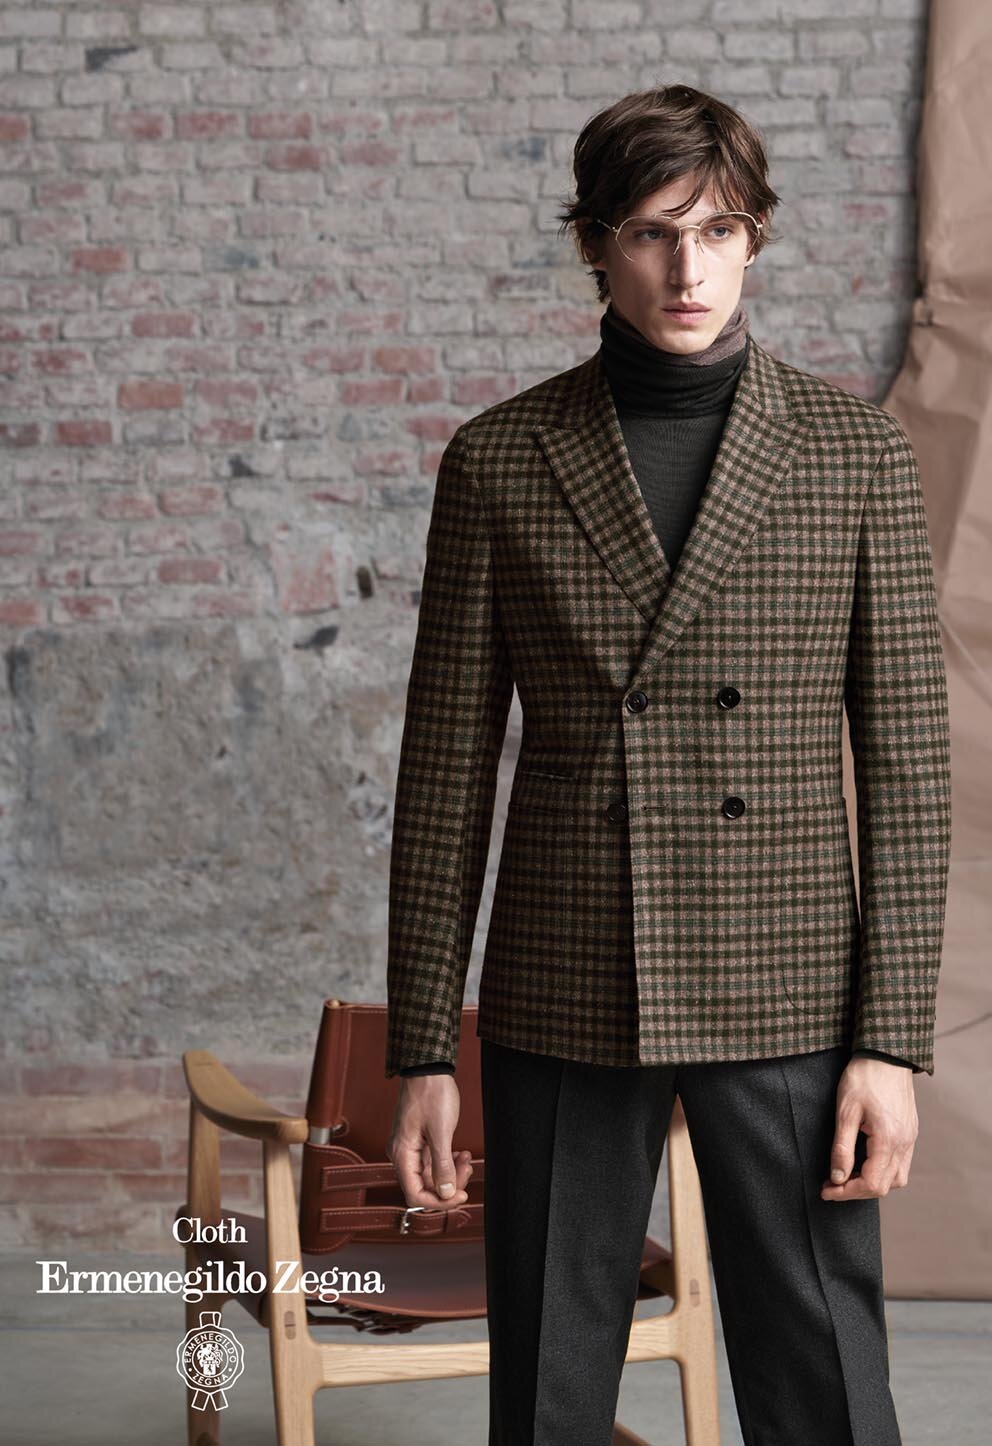 custom zegna suit — Gentleman's Blog | Nicholas Joseph